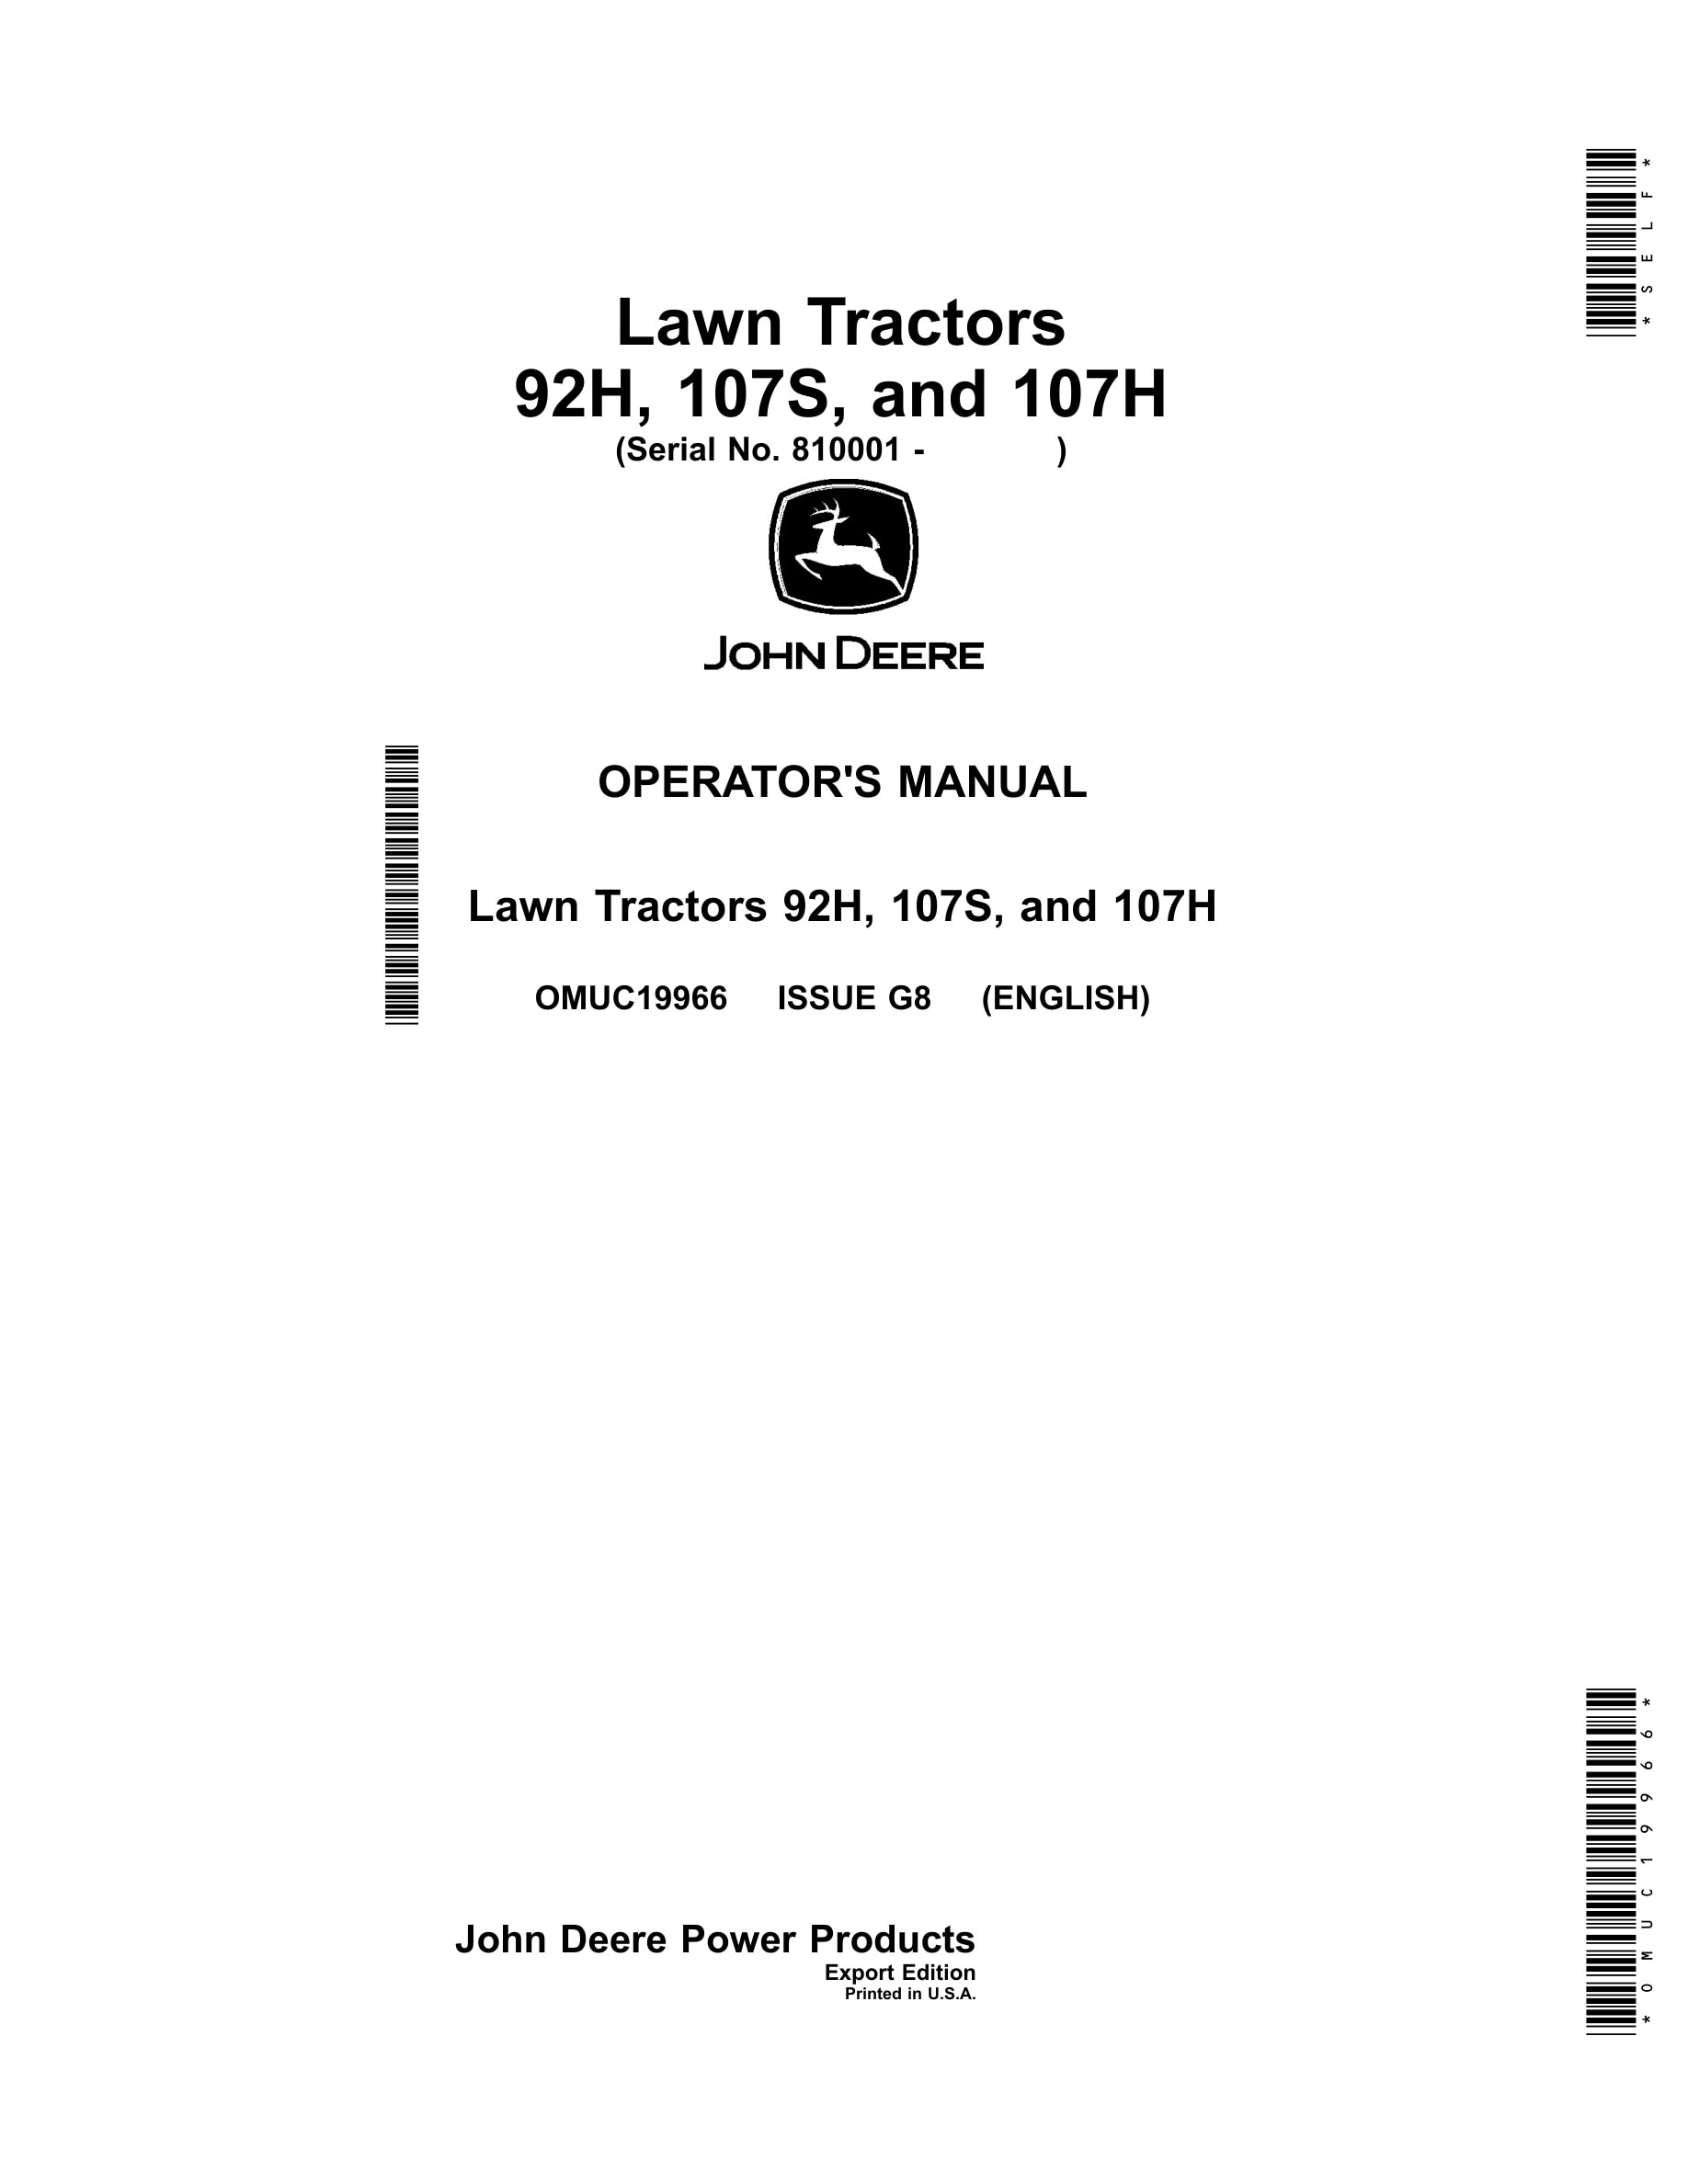 John Deere 92h, 107s, And 107h Lawn Tractors Operator Manuals OMUC19966-1